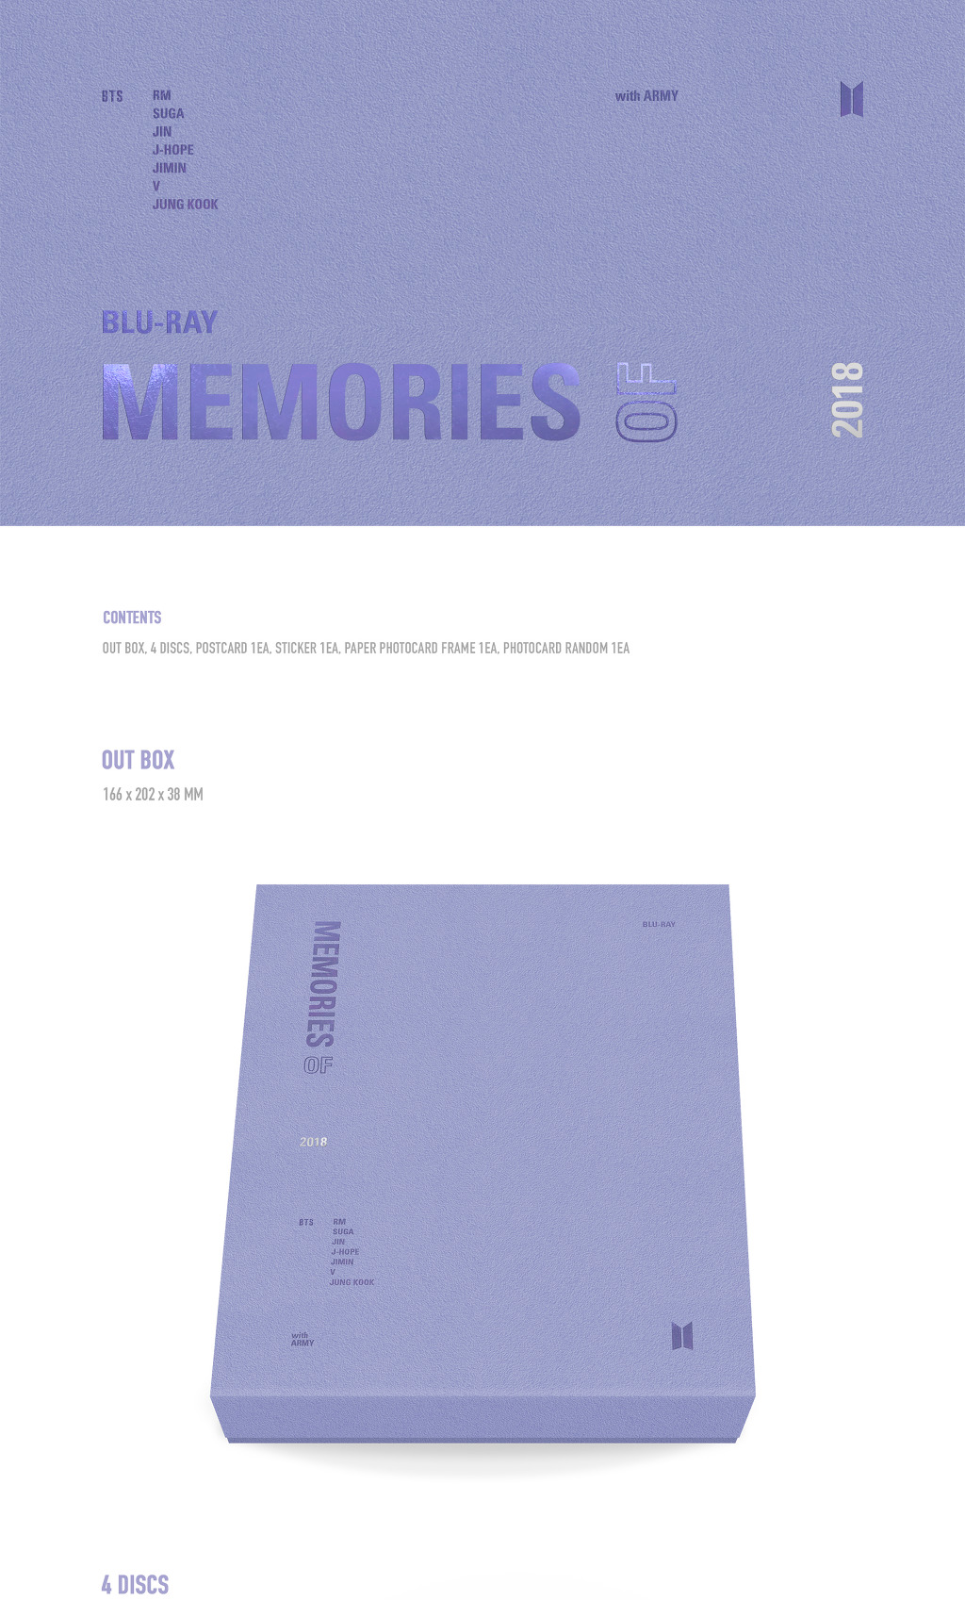 BTS 'Memories Of 2018' 4 BLU-RAY Discs+1p PostCard+1p Sticker+1p